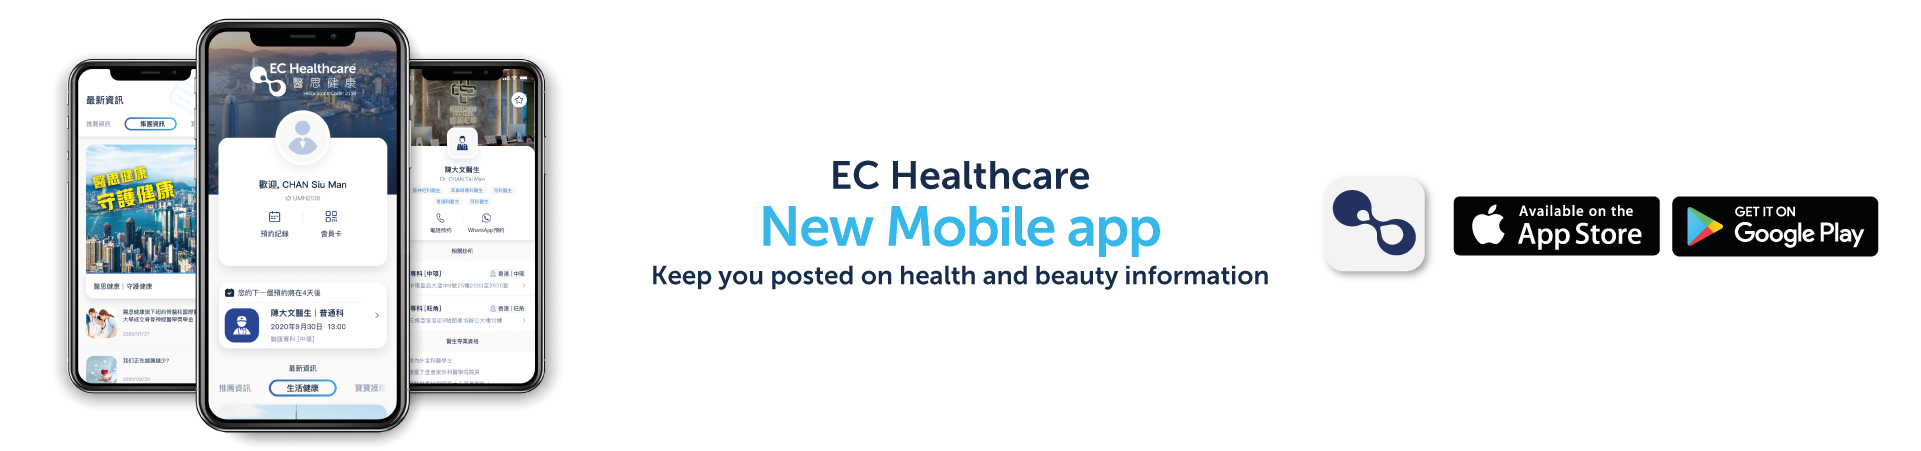 EC Healthcare Mobile App